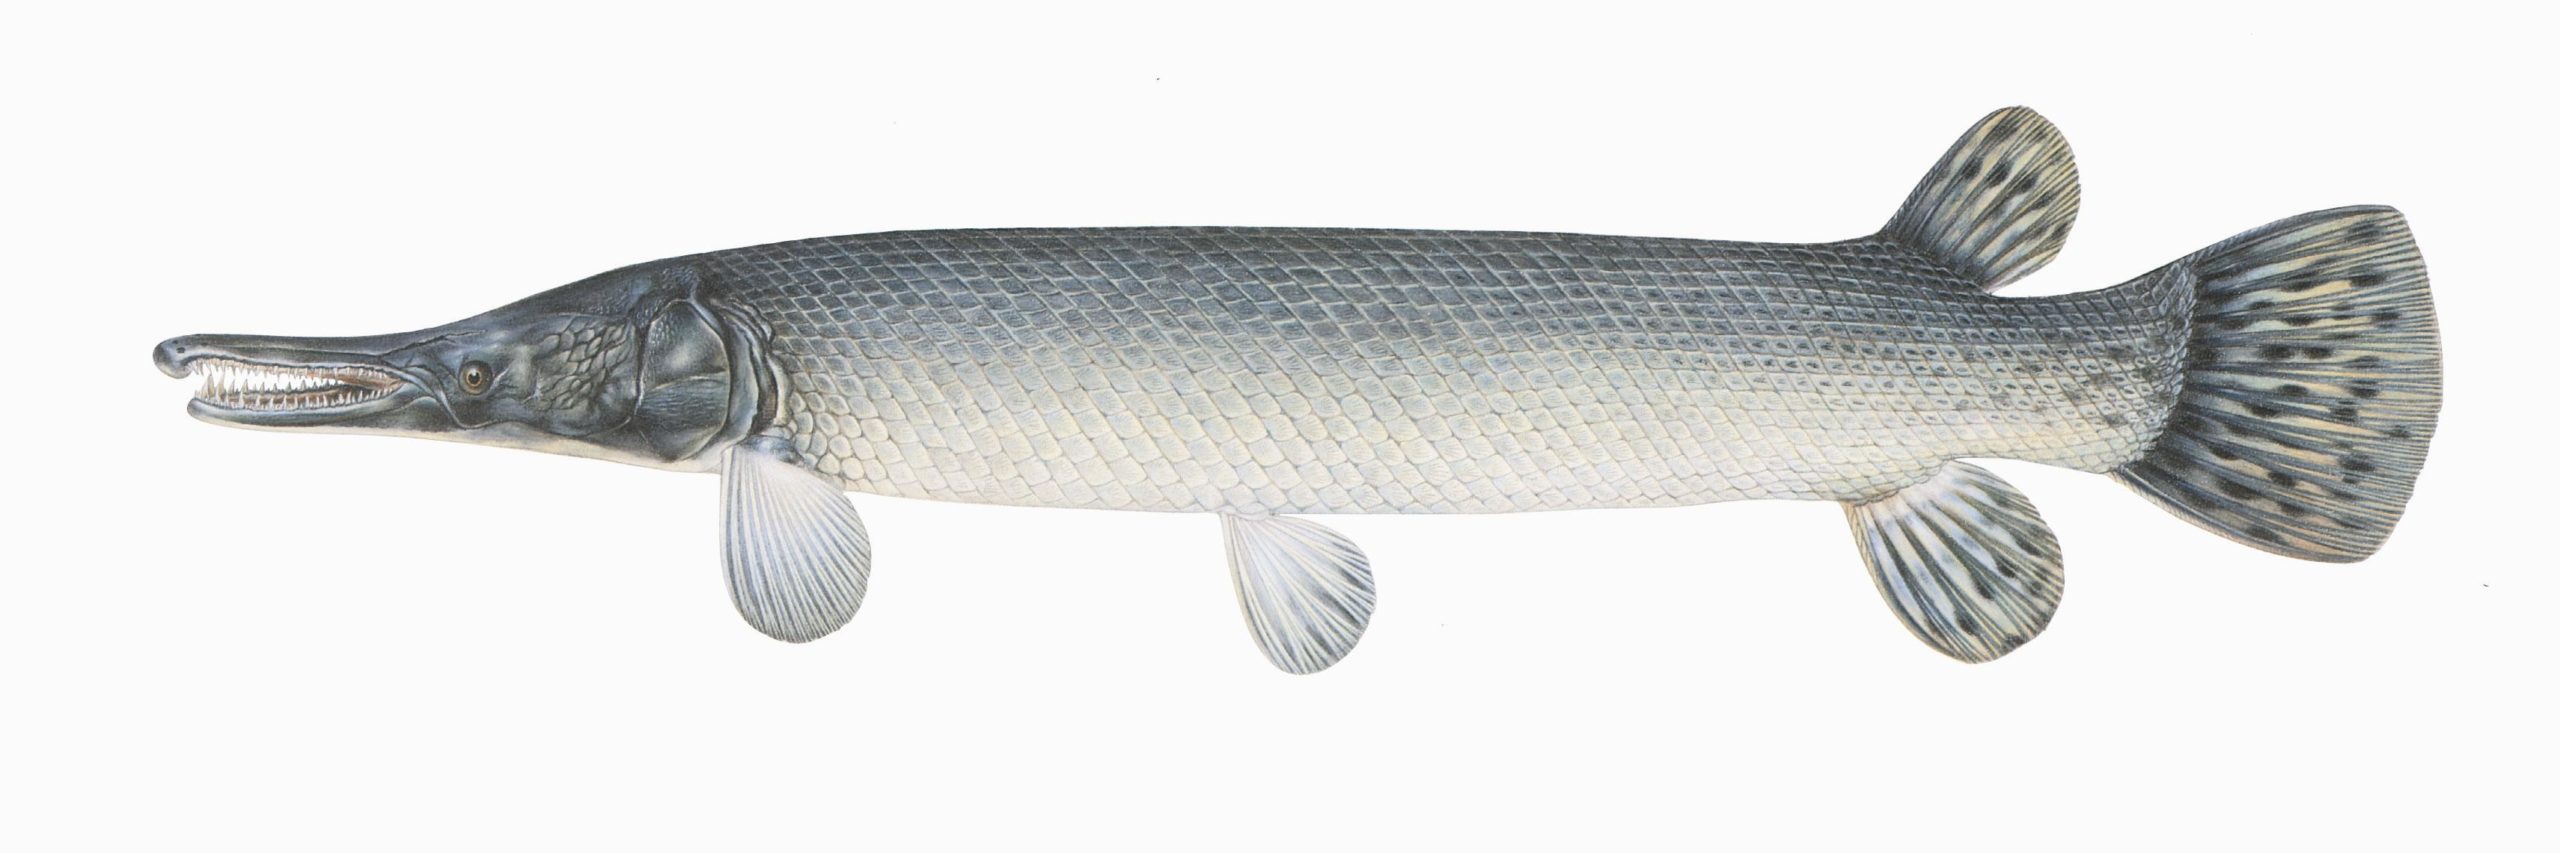 illustration of long narrow fish